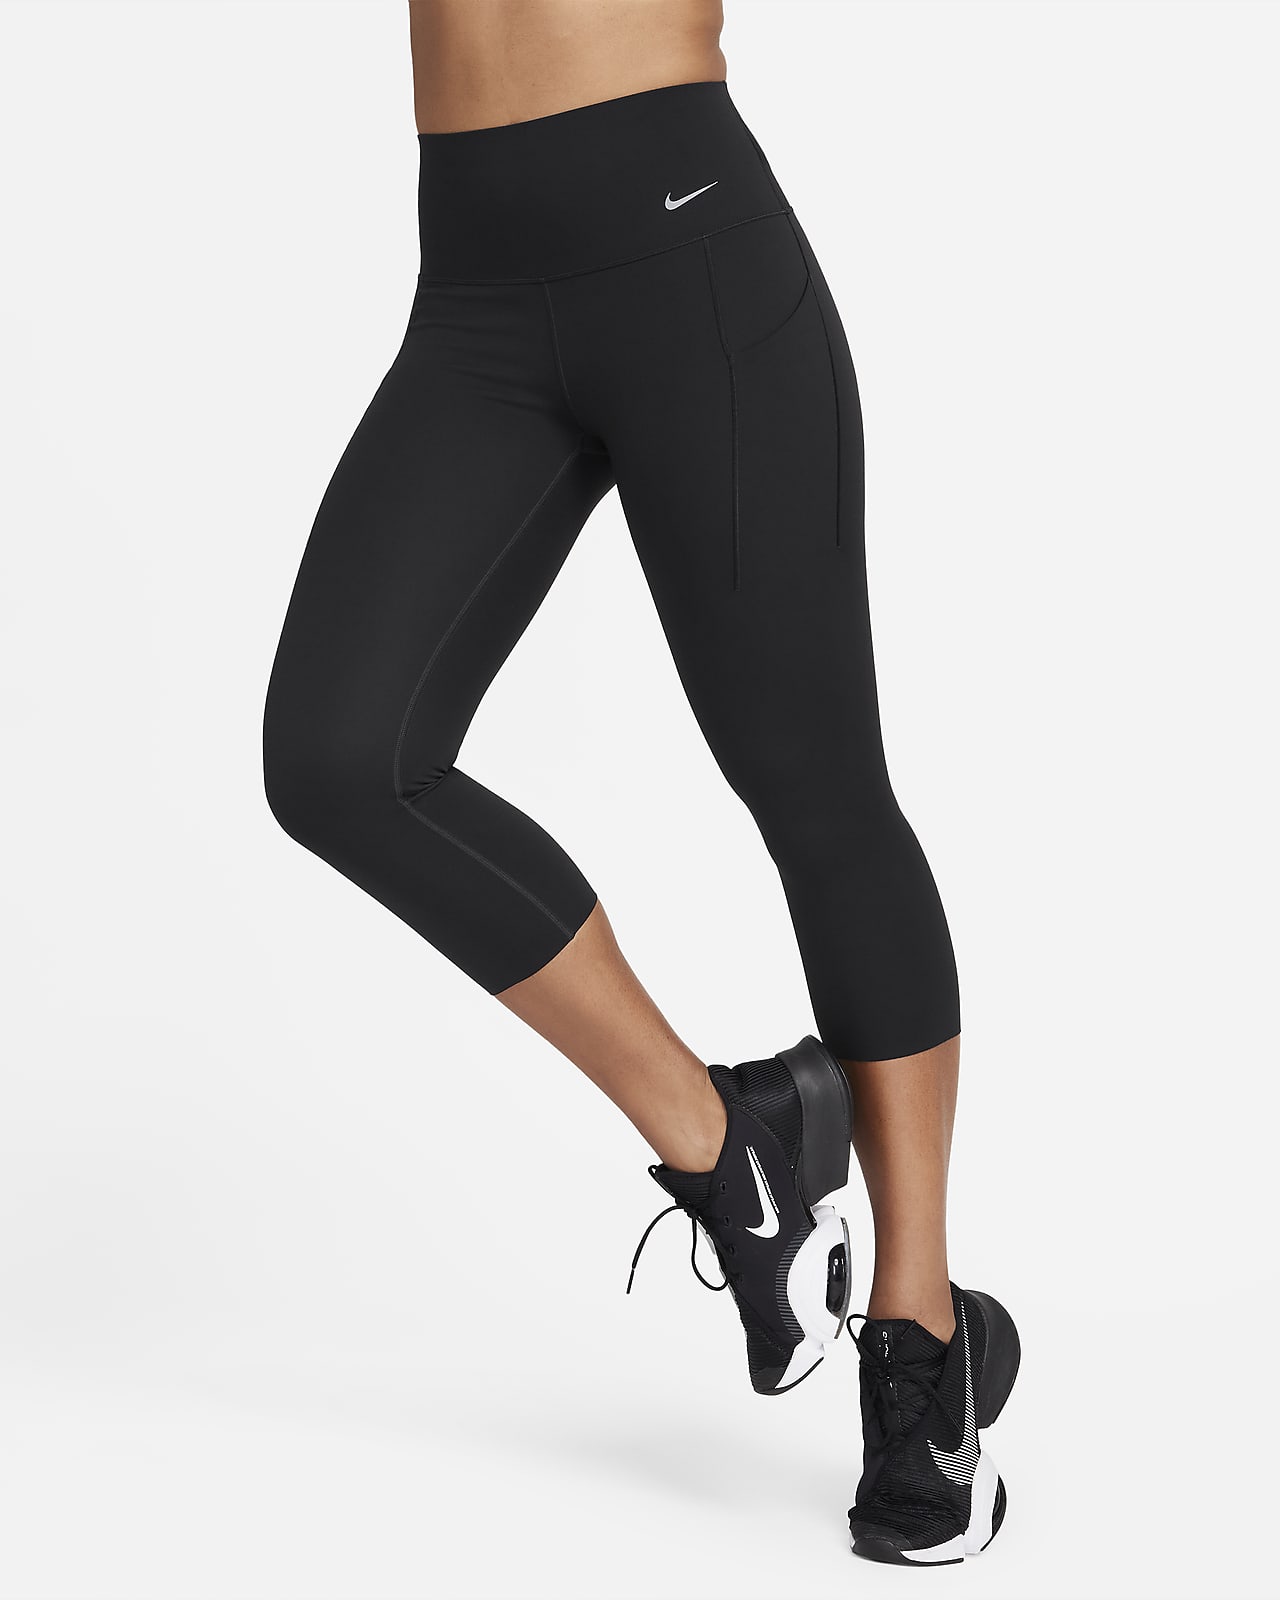 Leggings de desporto cropped, nike pro 365 preto Nike